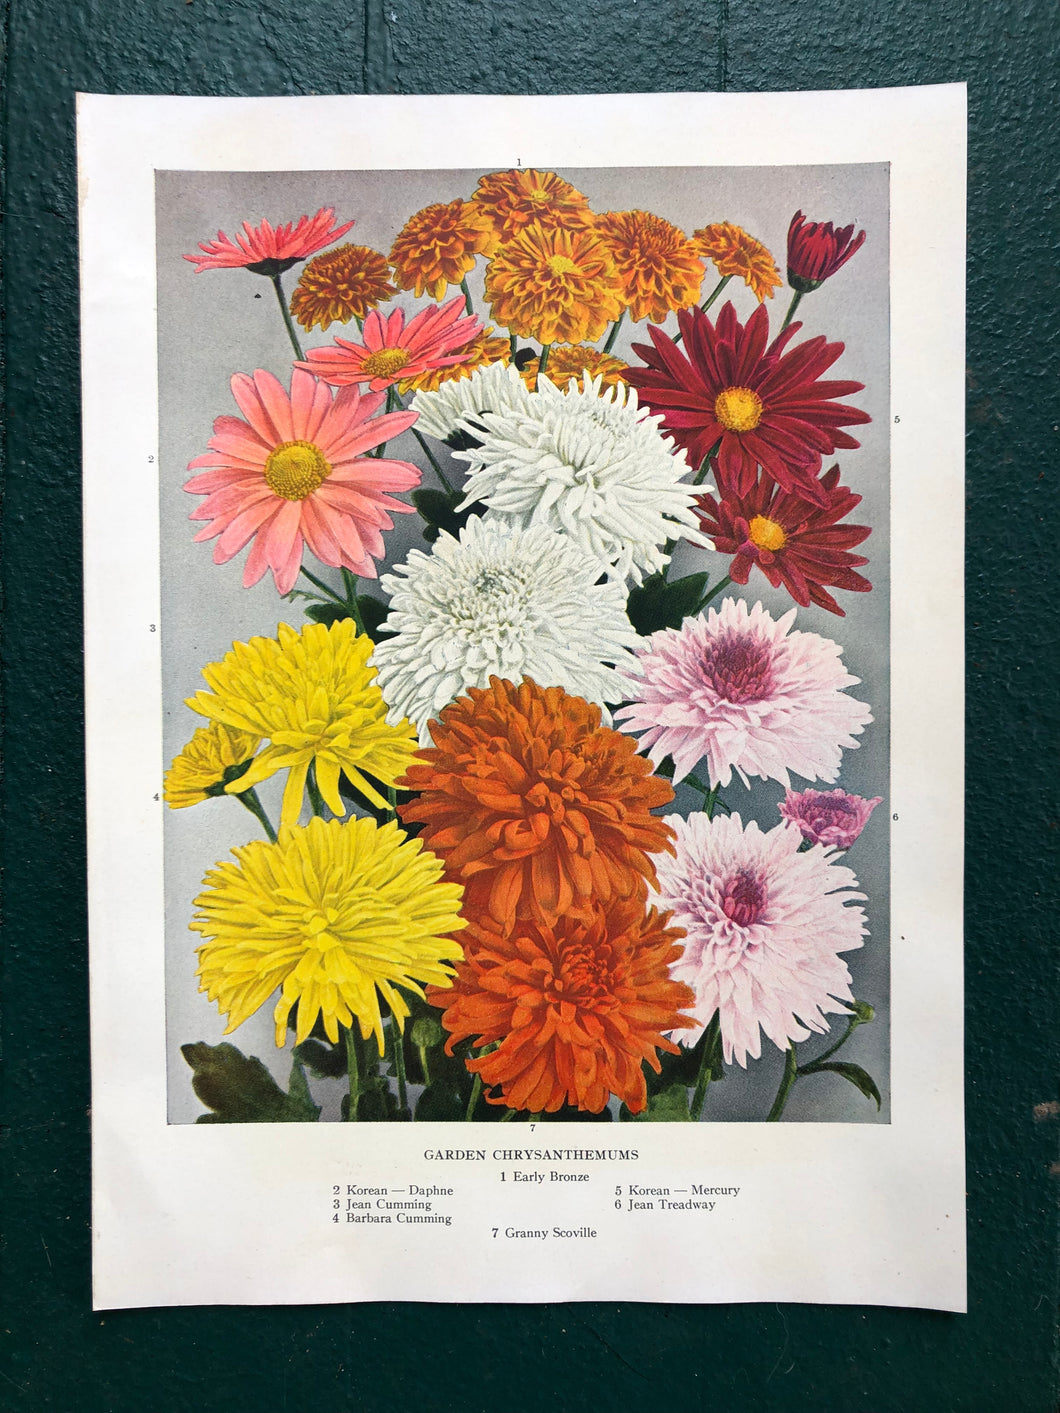 Garden Chrysanthemums print from “The Practical Encyclopedia of Gardening”